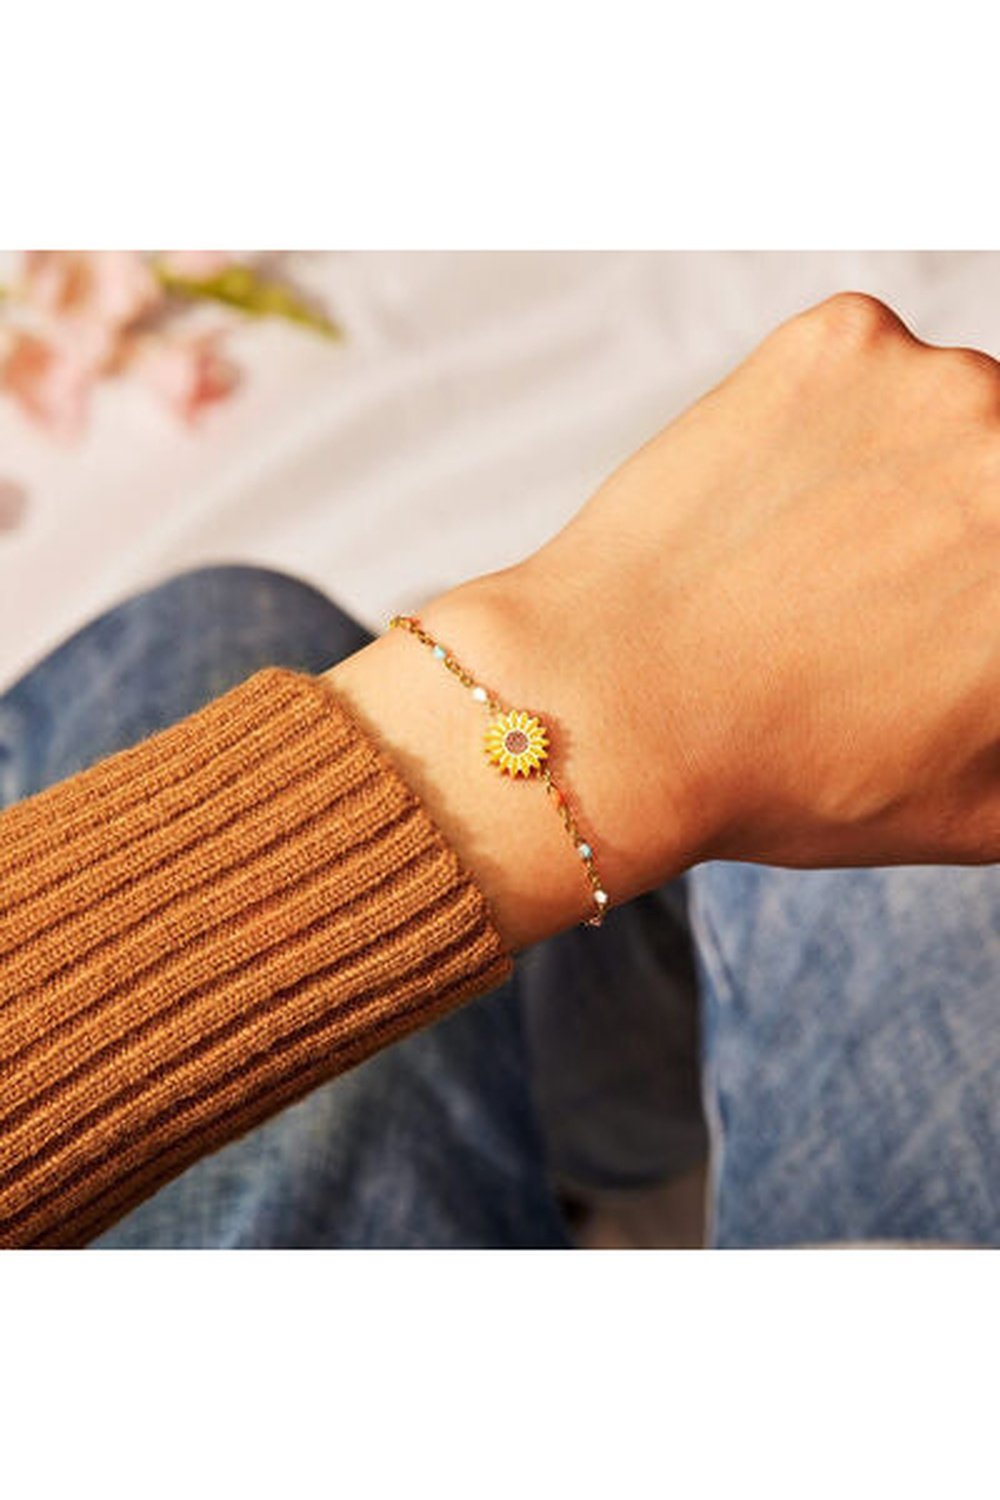 Sunflower Shape 18K Gold-Plated Bead Bracelet - Bracelets - FITGGINS